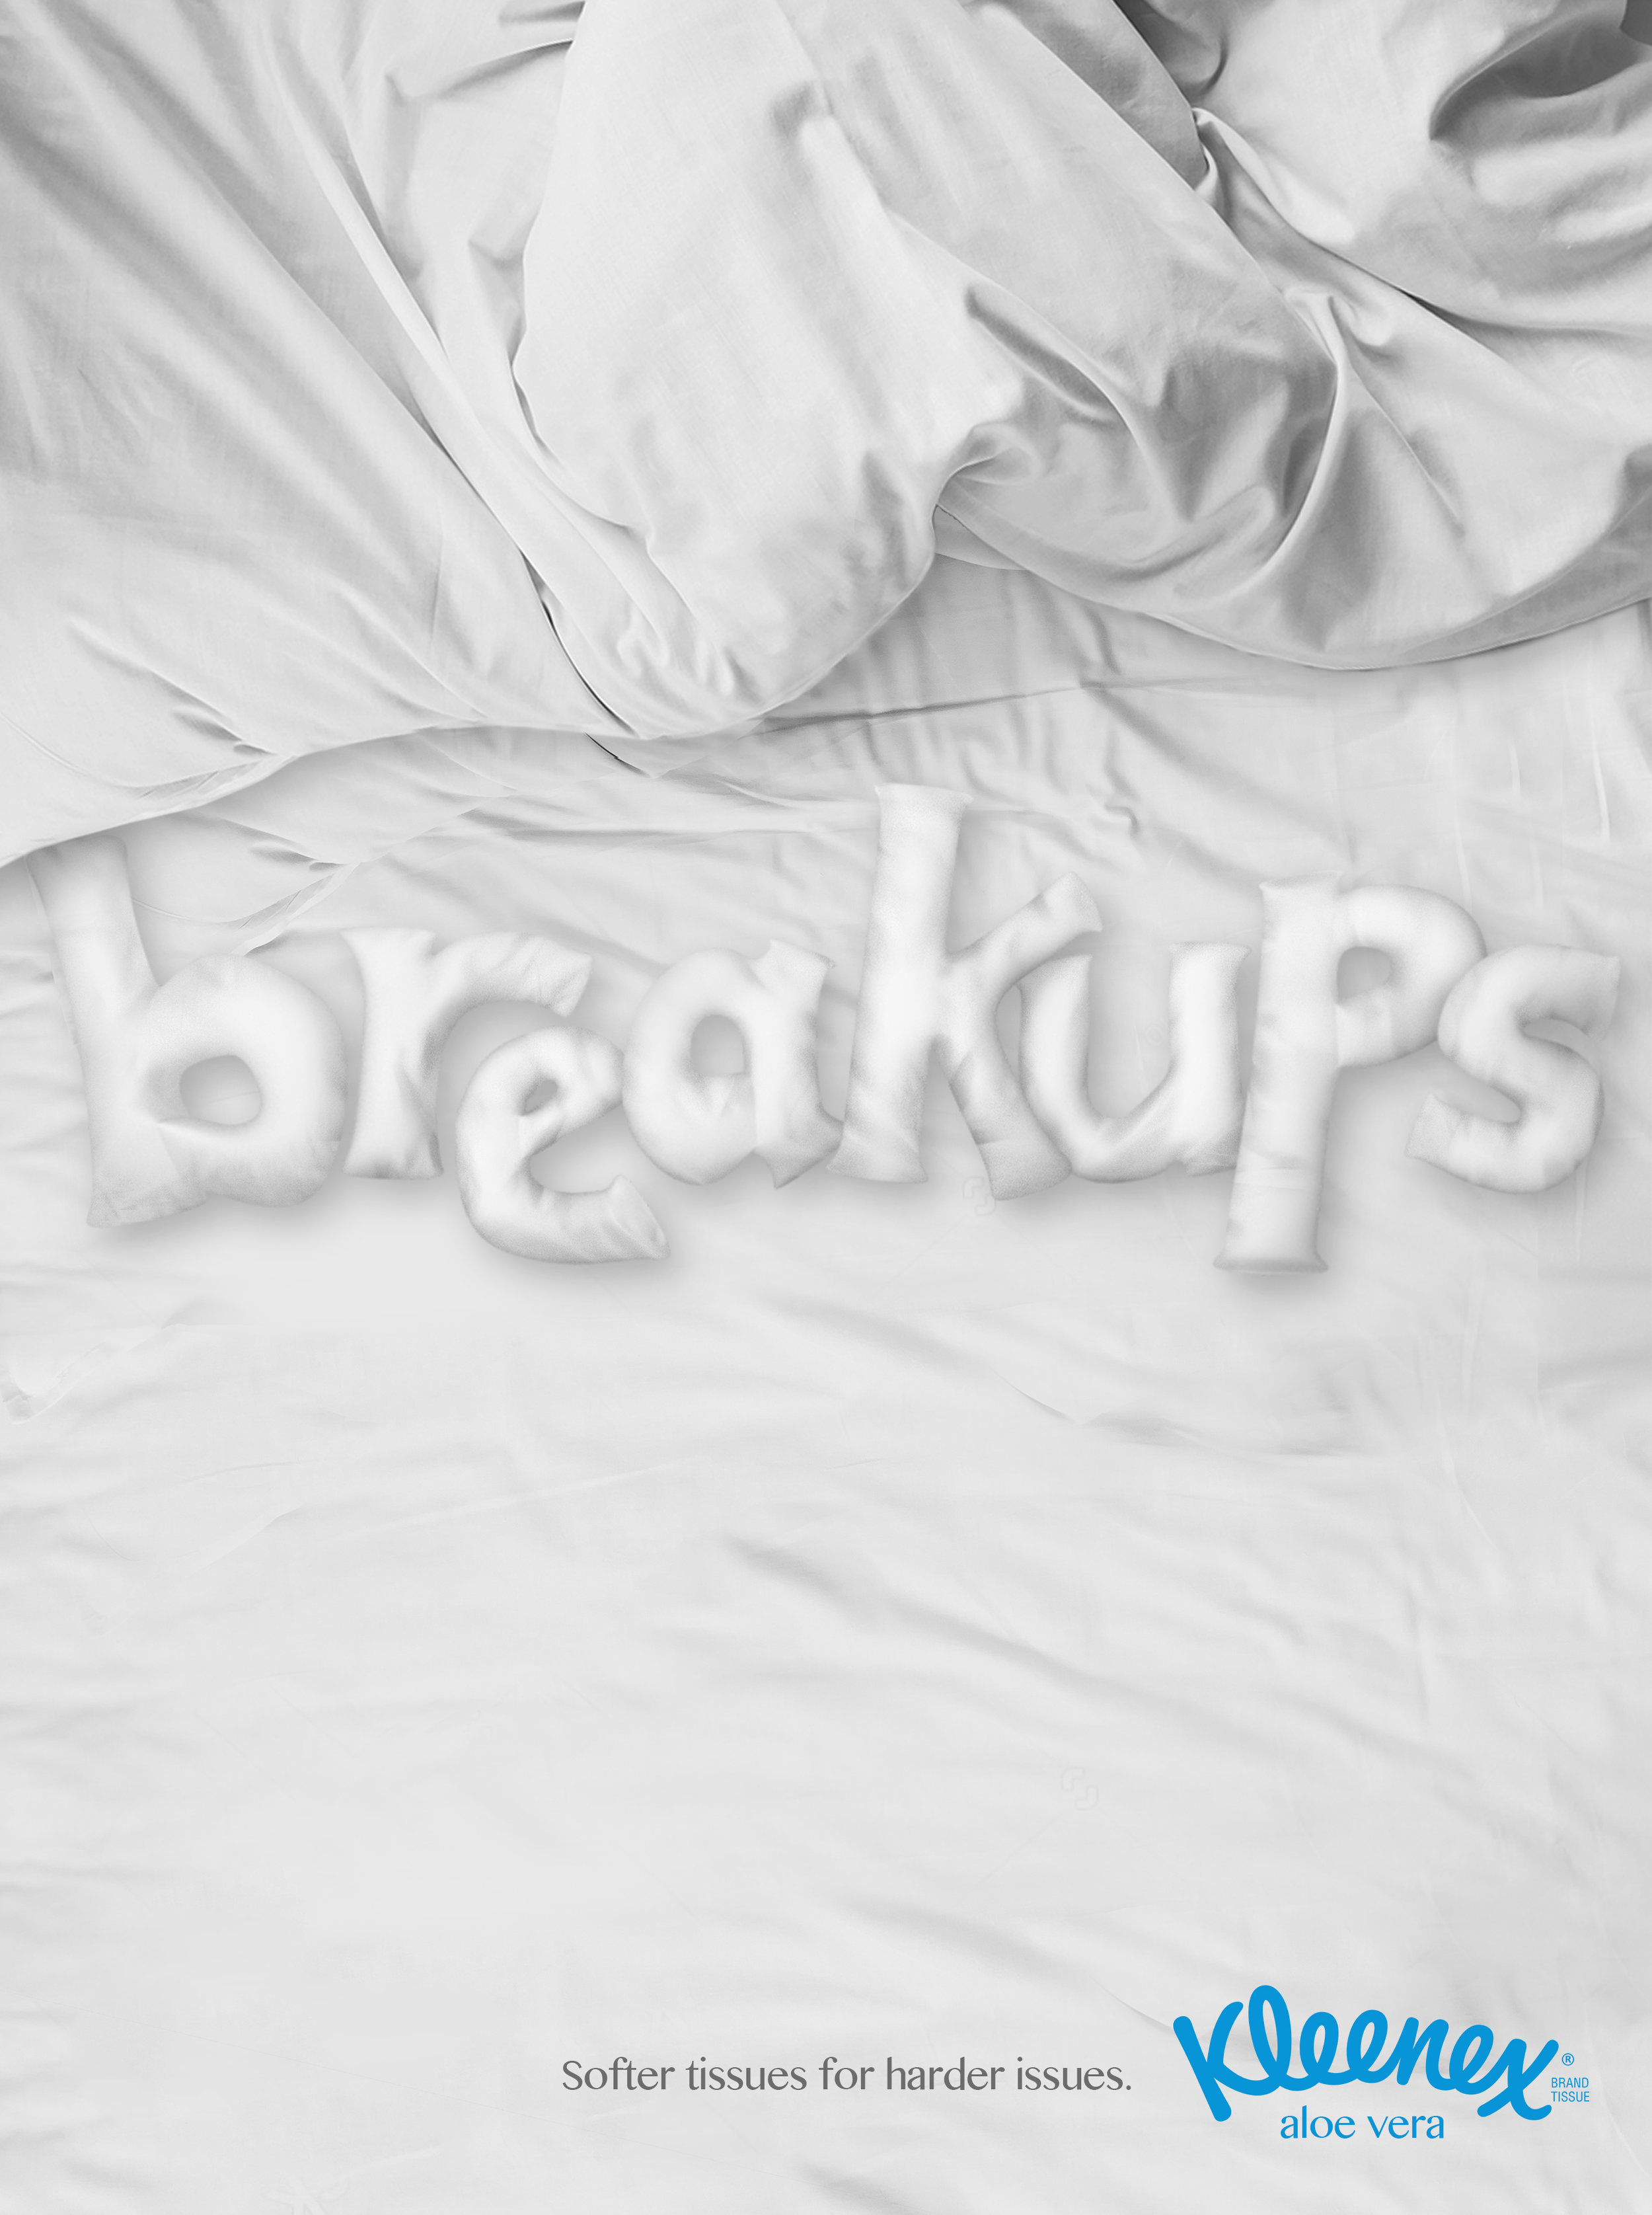 BreakUps.jpg